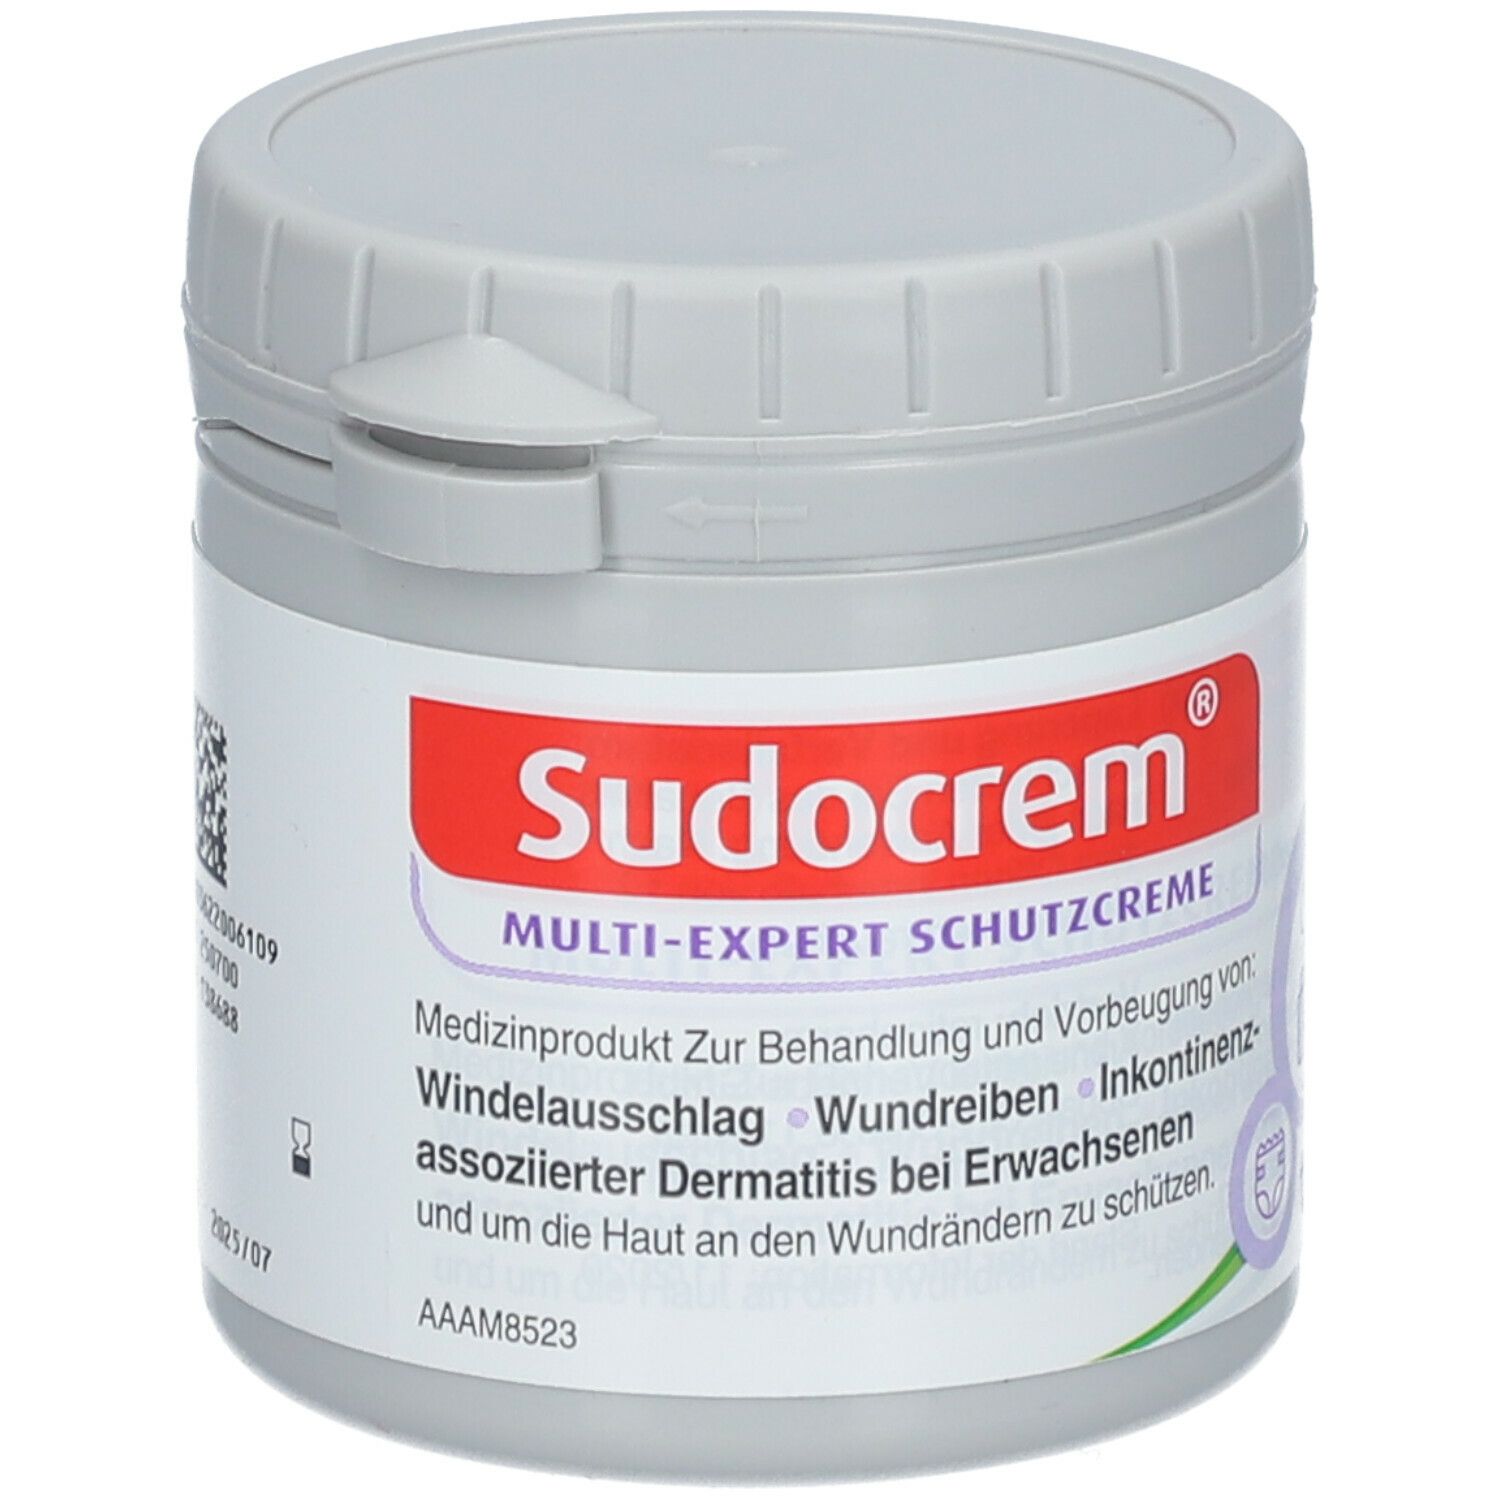 Sudocrem® MULTI-EXPERT SCHUTZCREME